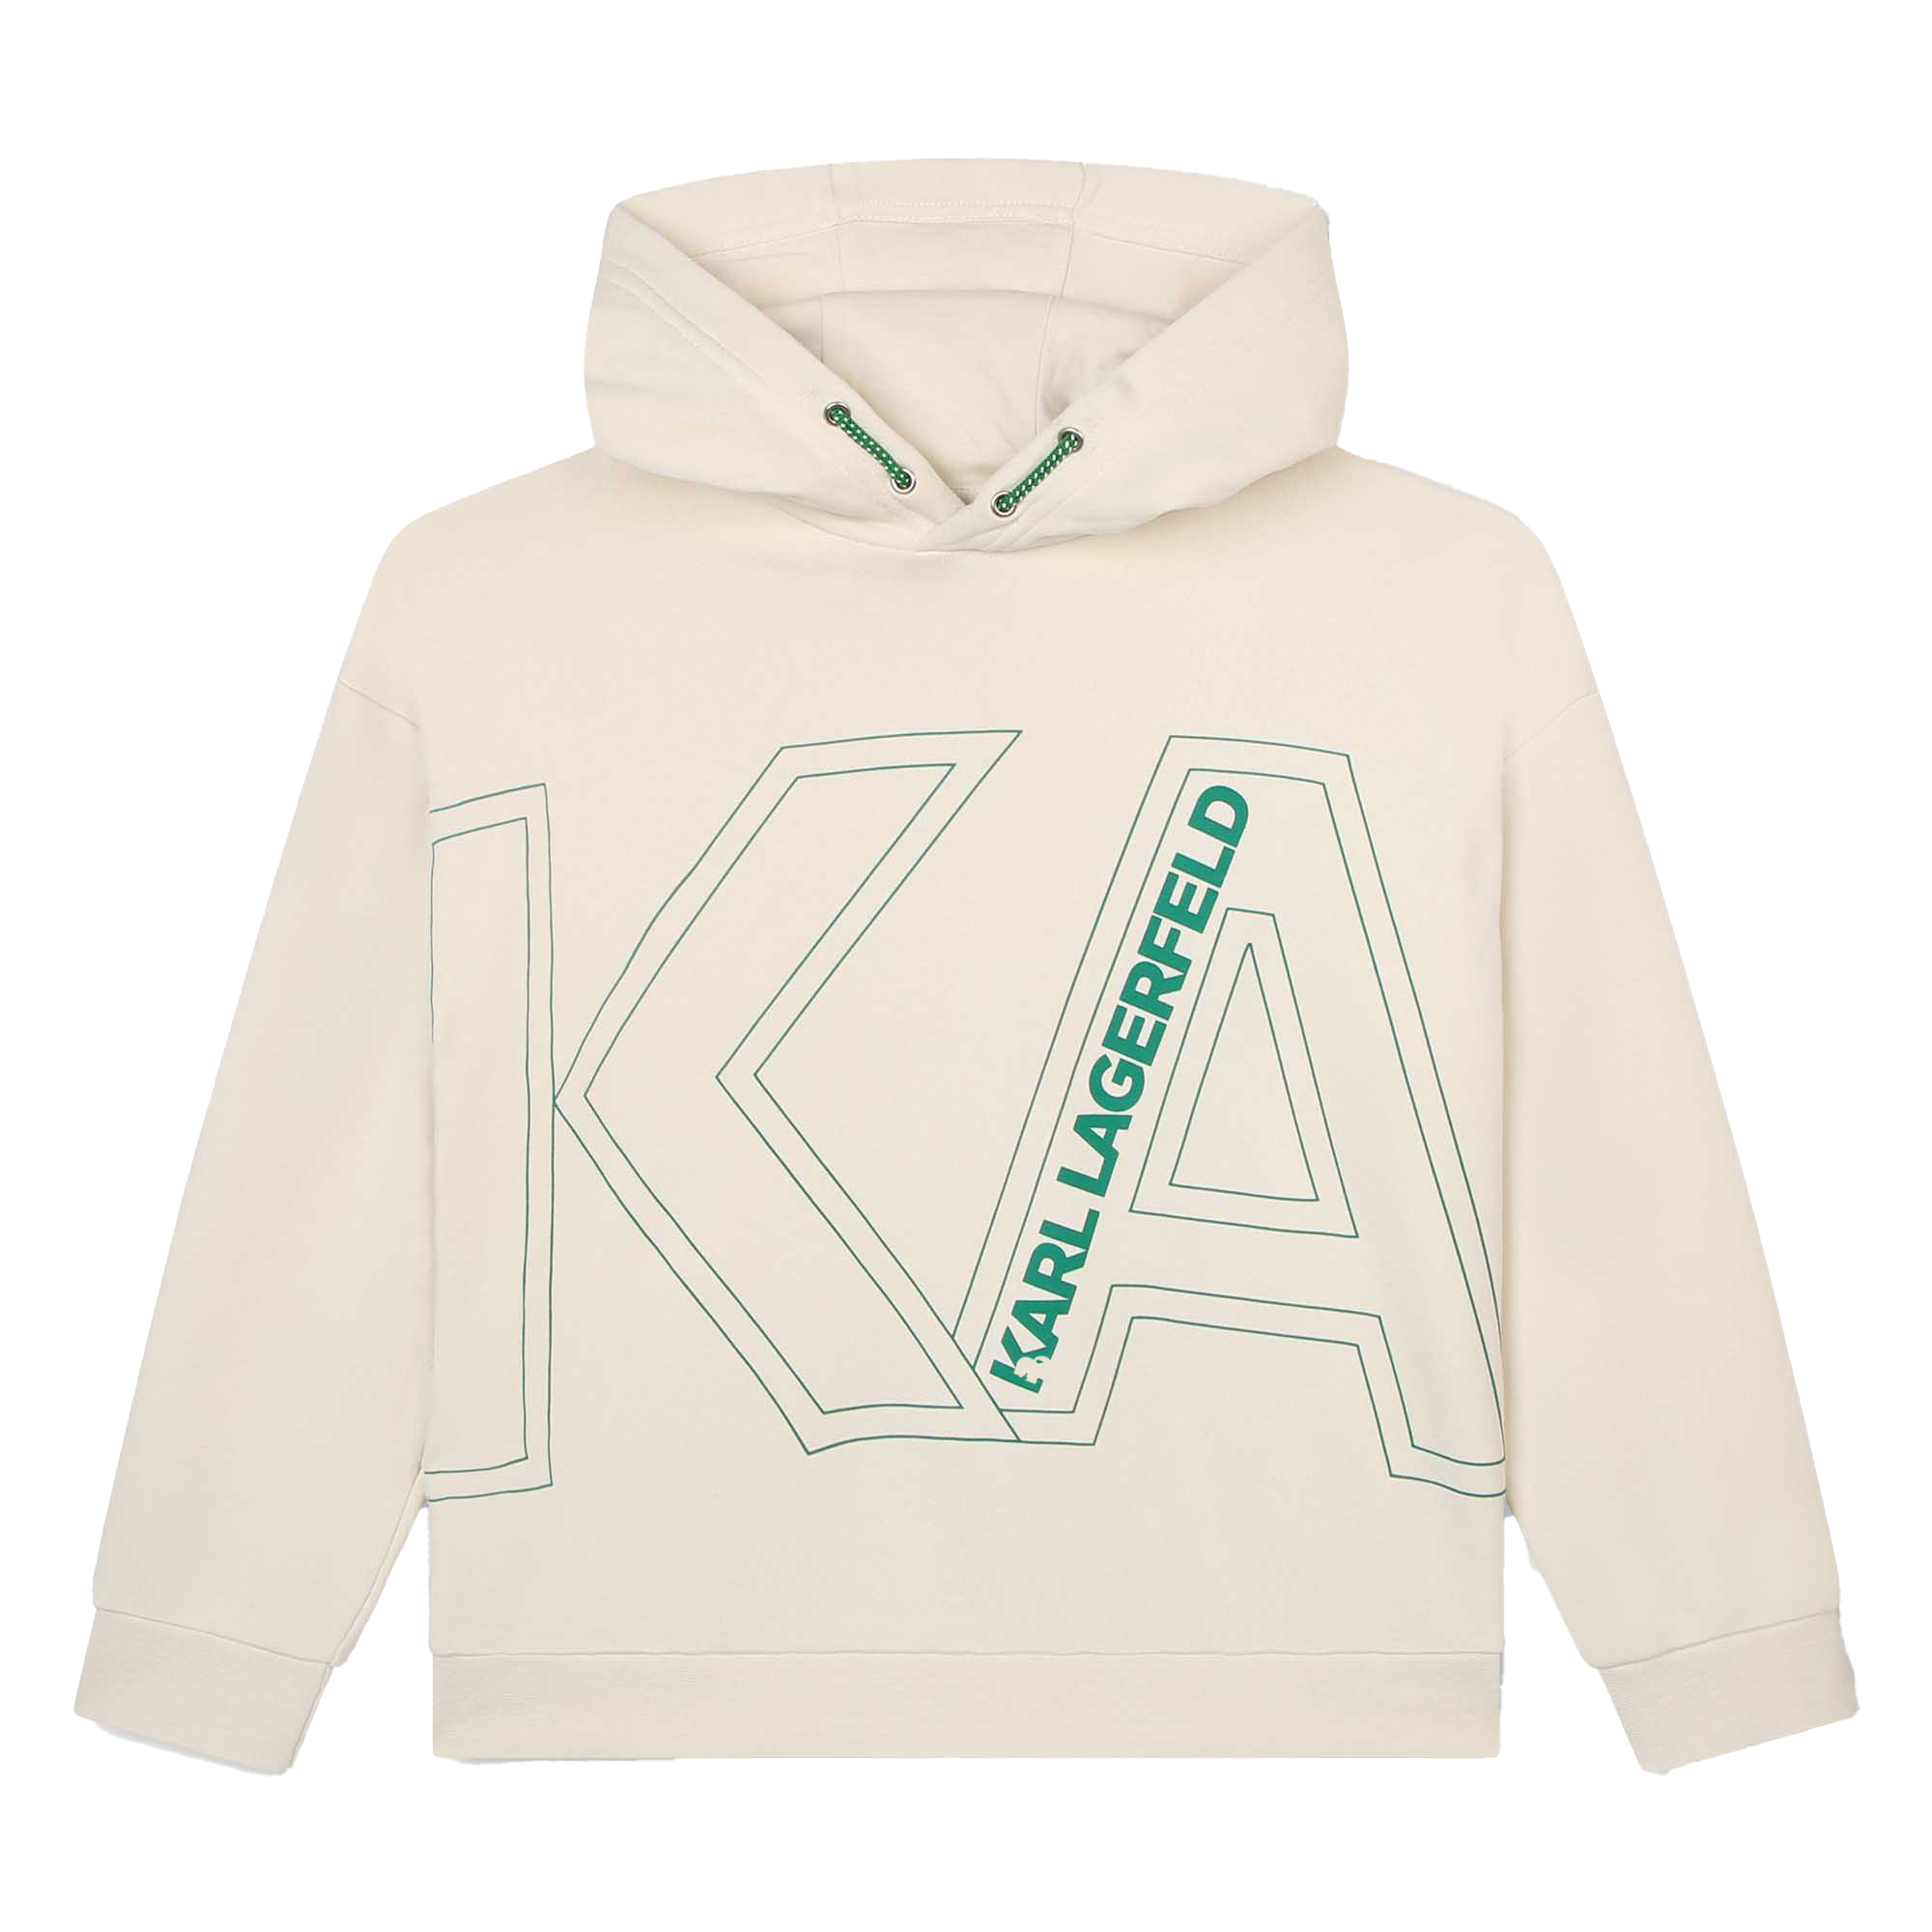 Hooded sweatshirt KARL LAGERFELD KIDS for BOY